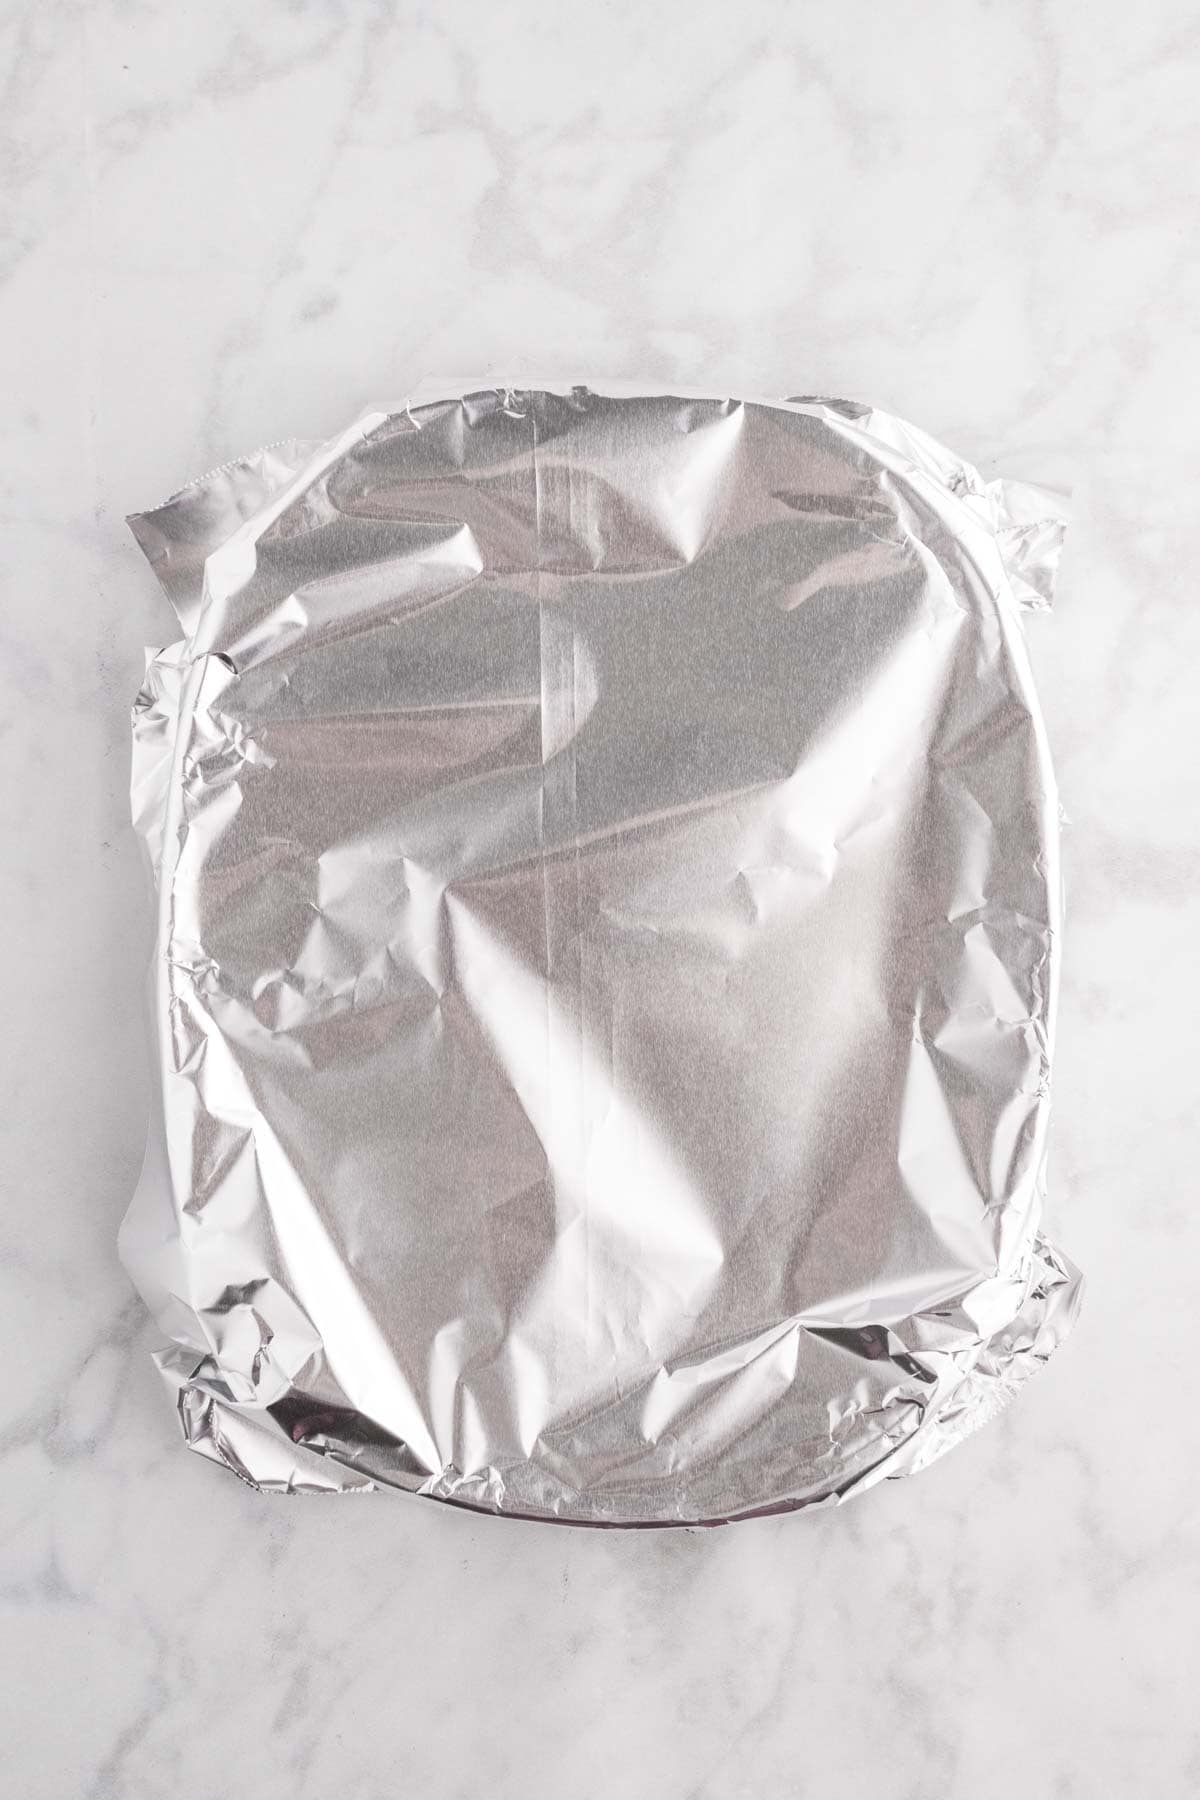 aluminum foil covered baking dish